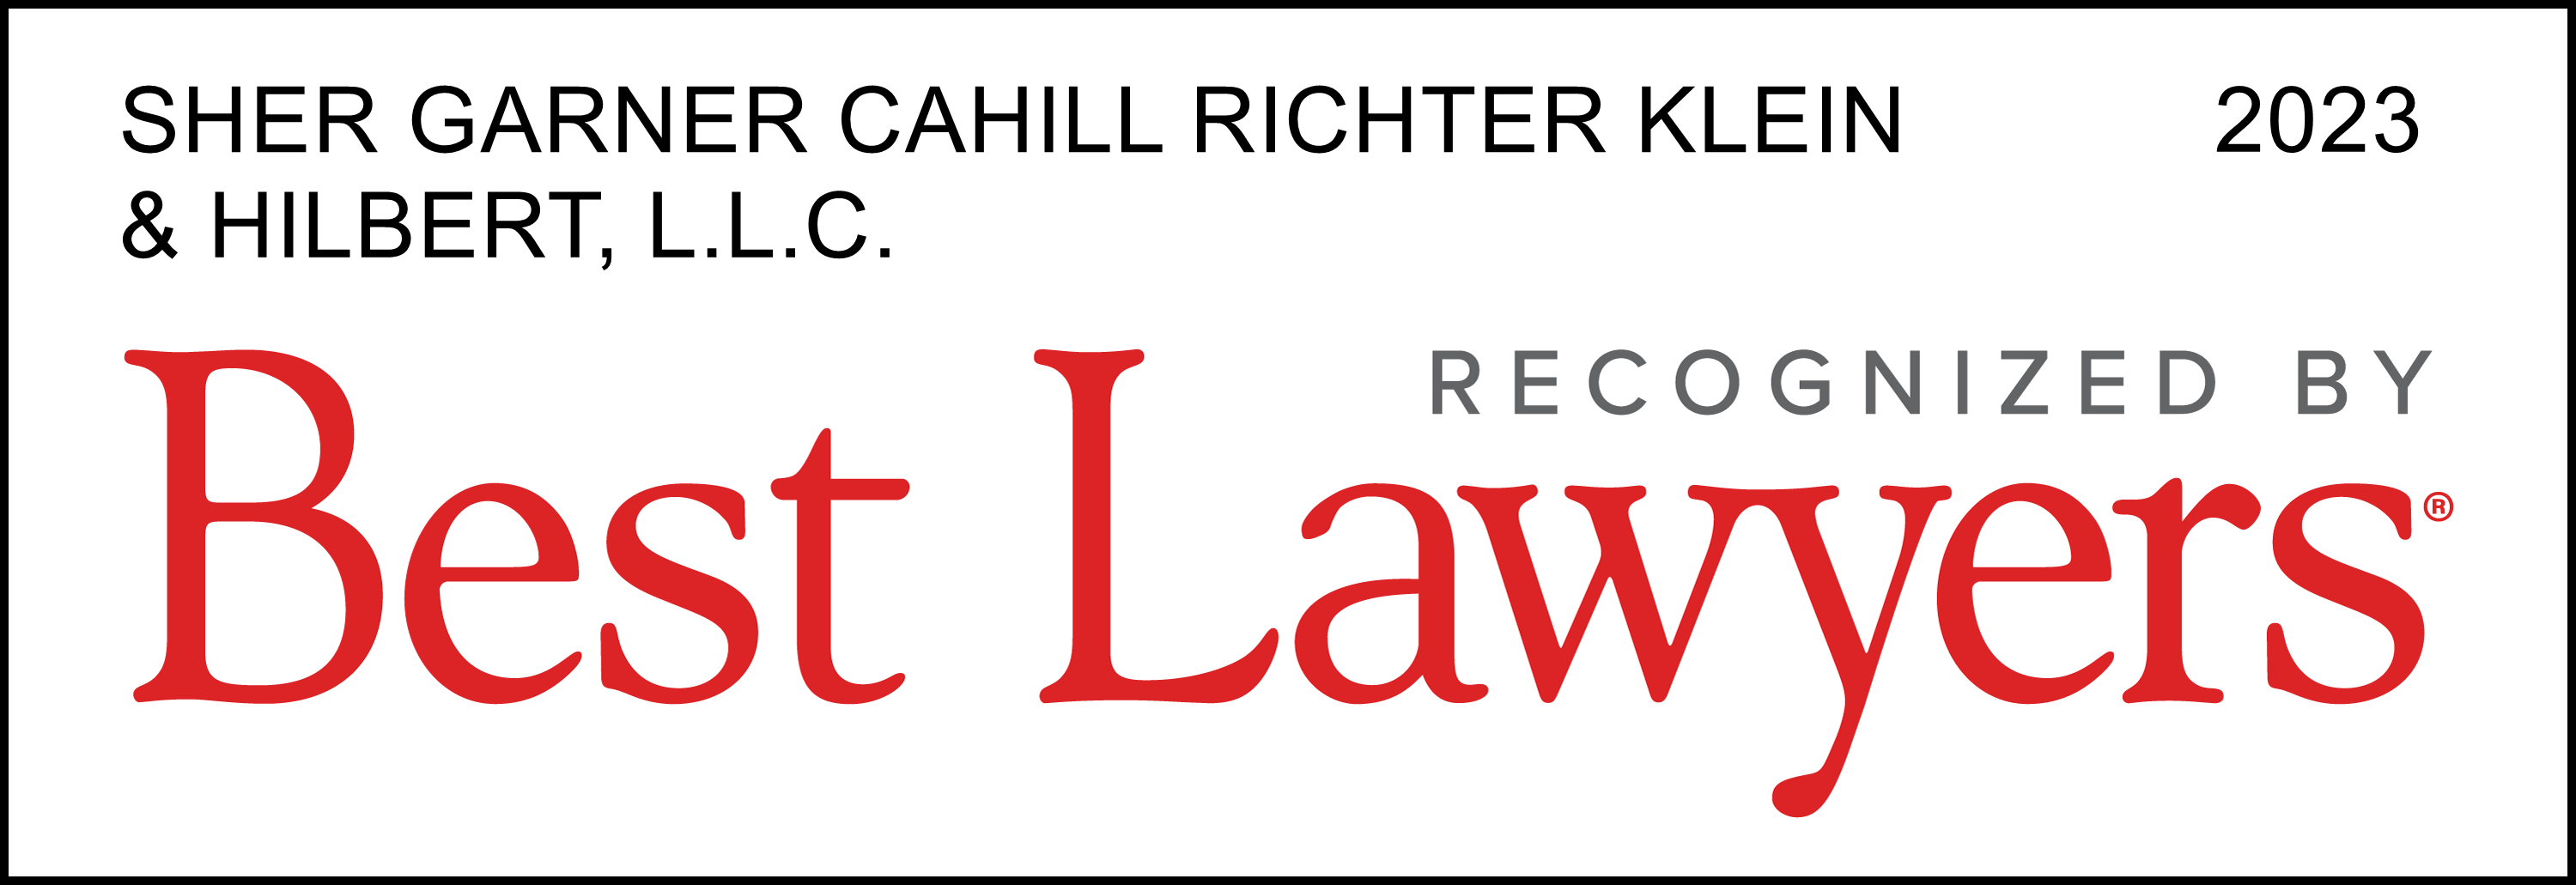 Sher Garner Cahill Richter Klein & Hilbert, L.L.C. | Recognized by Best Lawyers | 2023